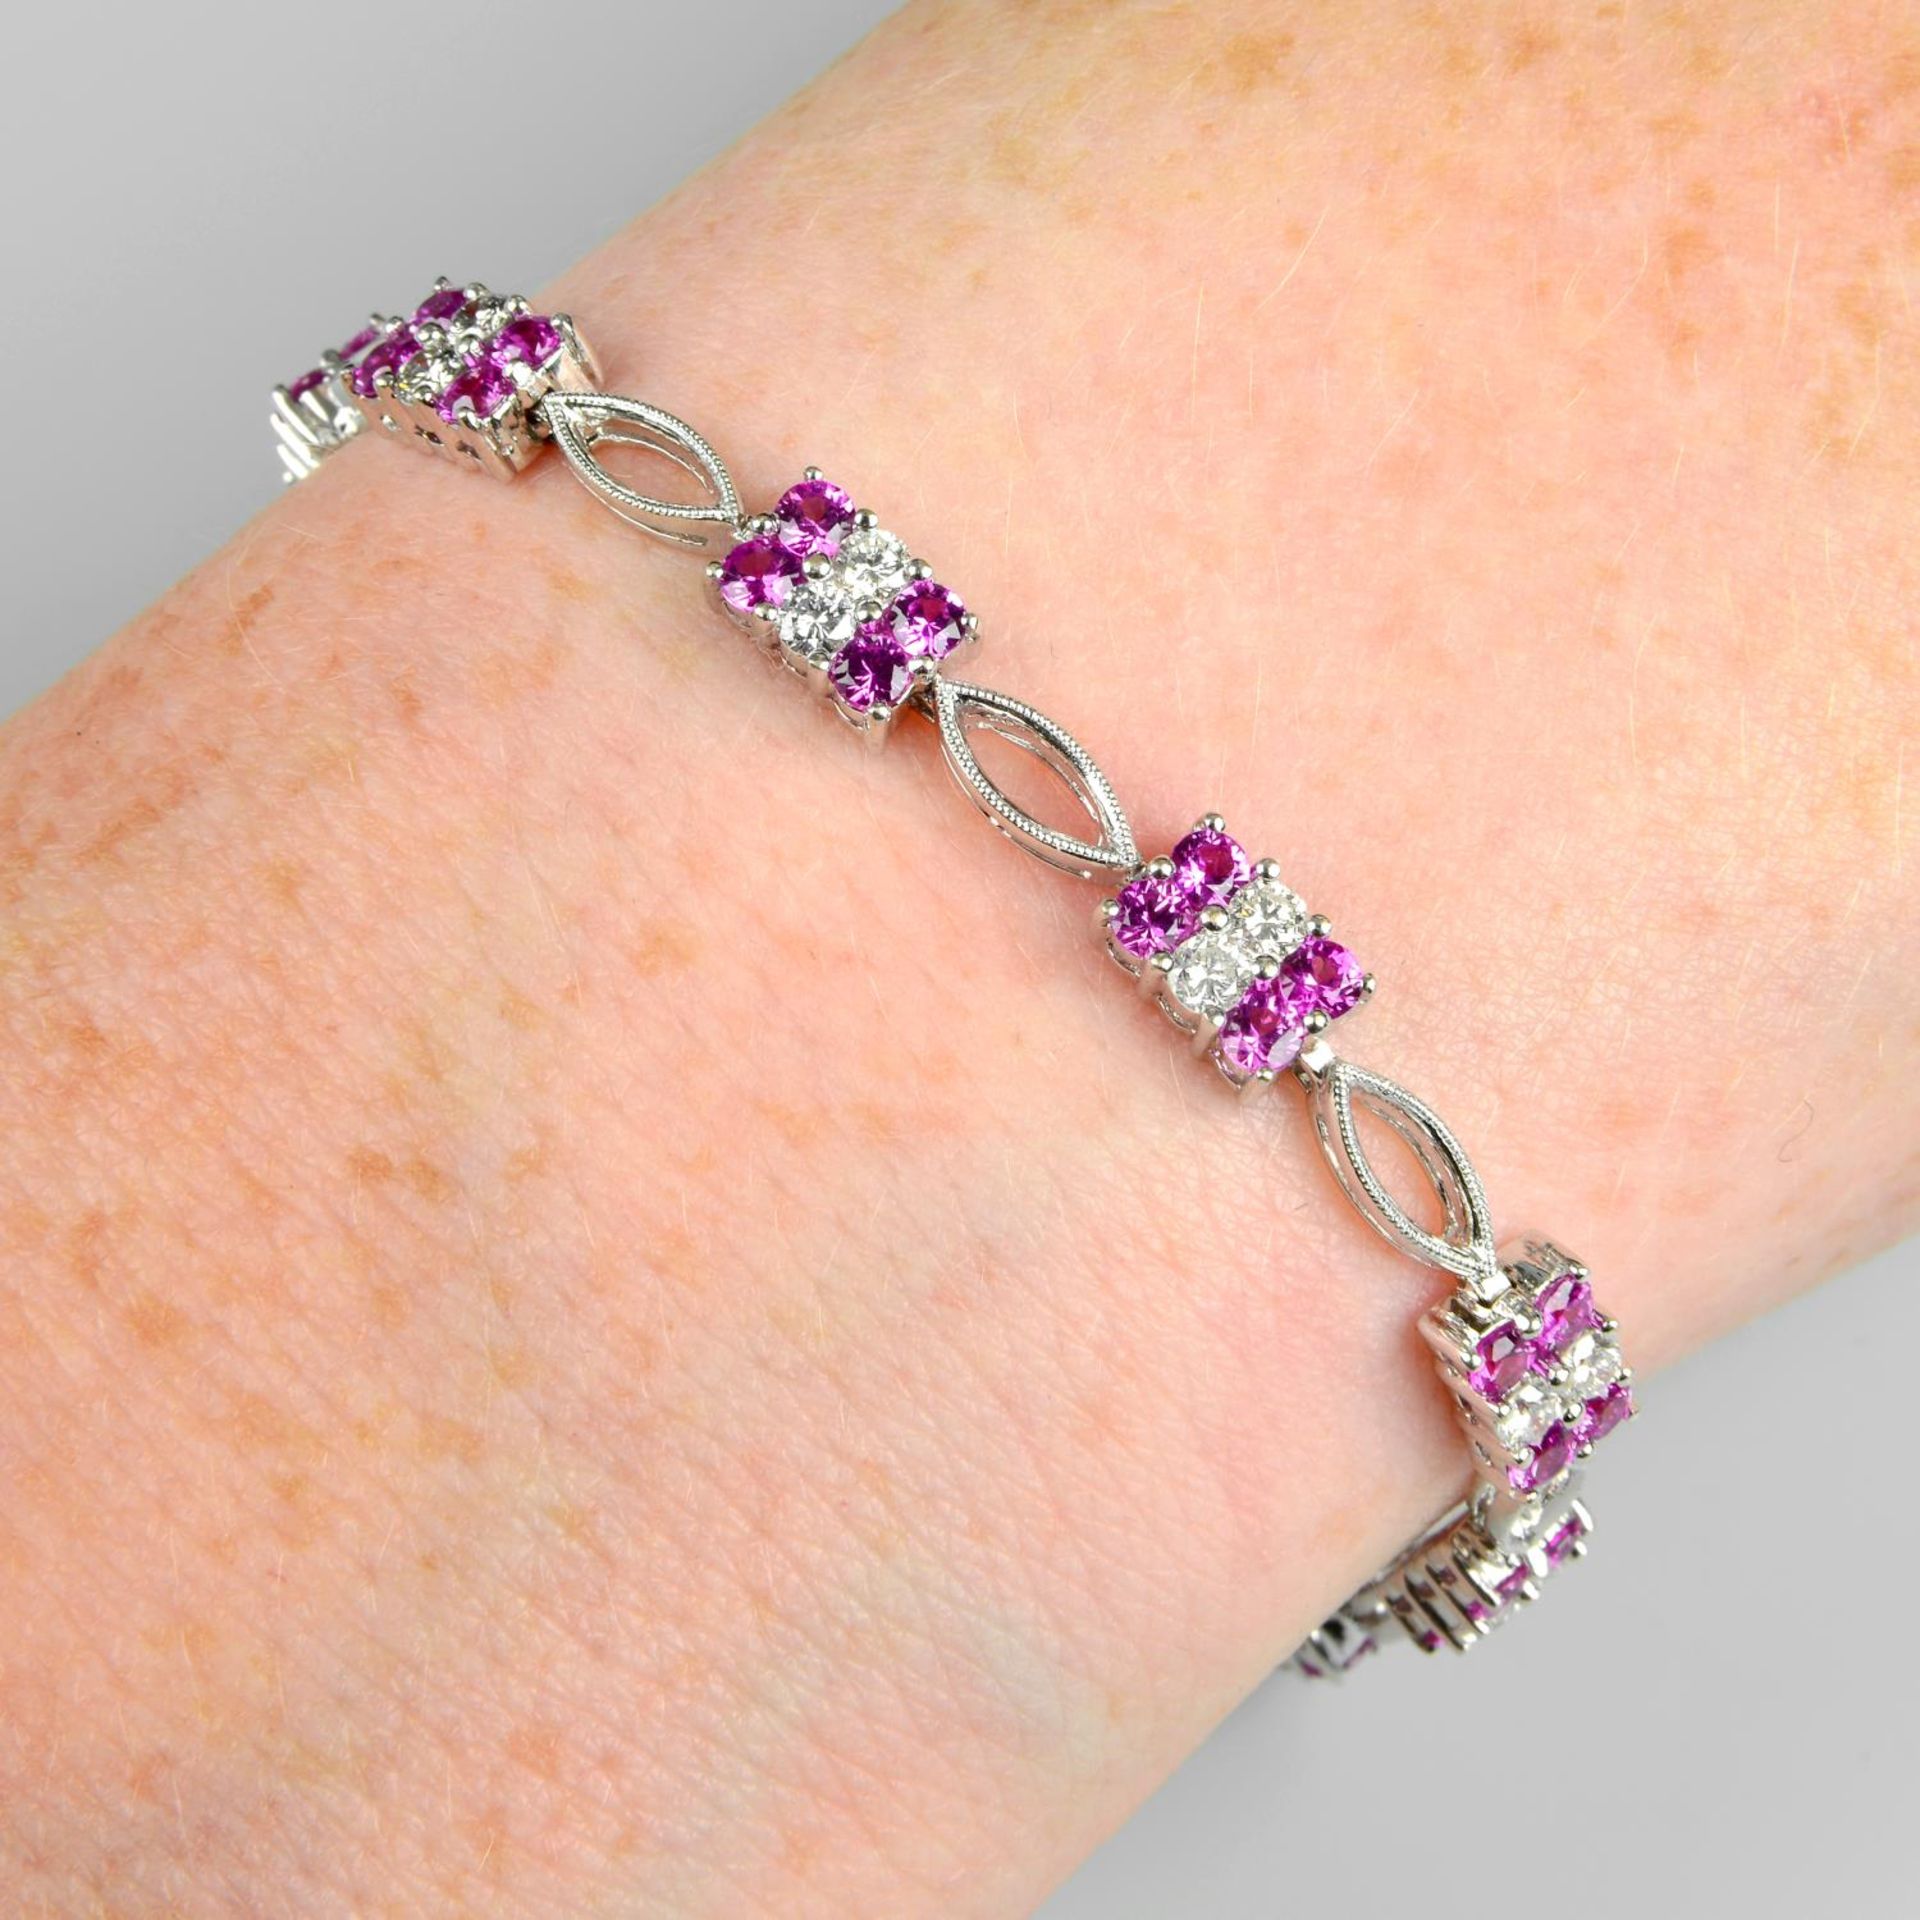 A pink sapphire and diamond bracelet.